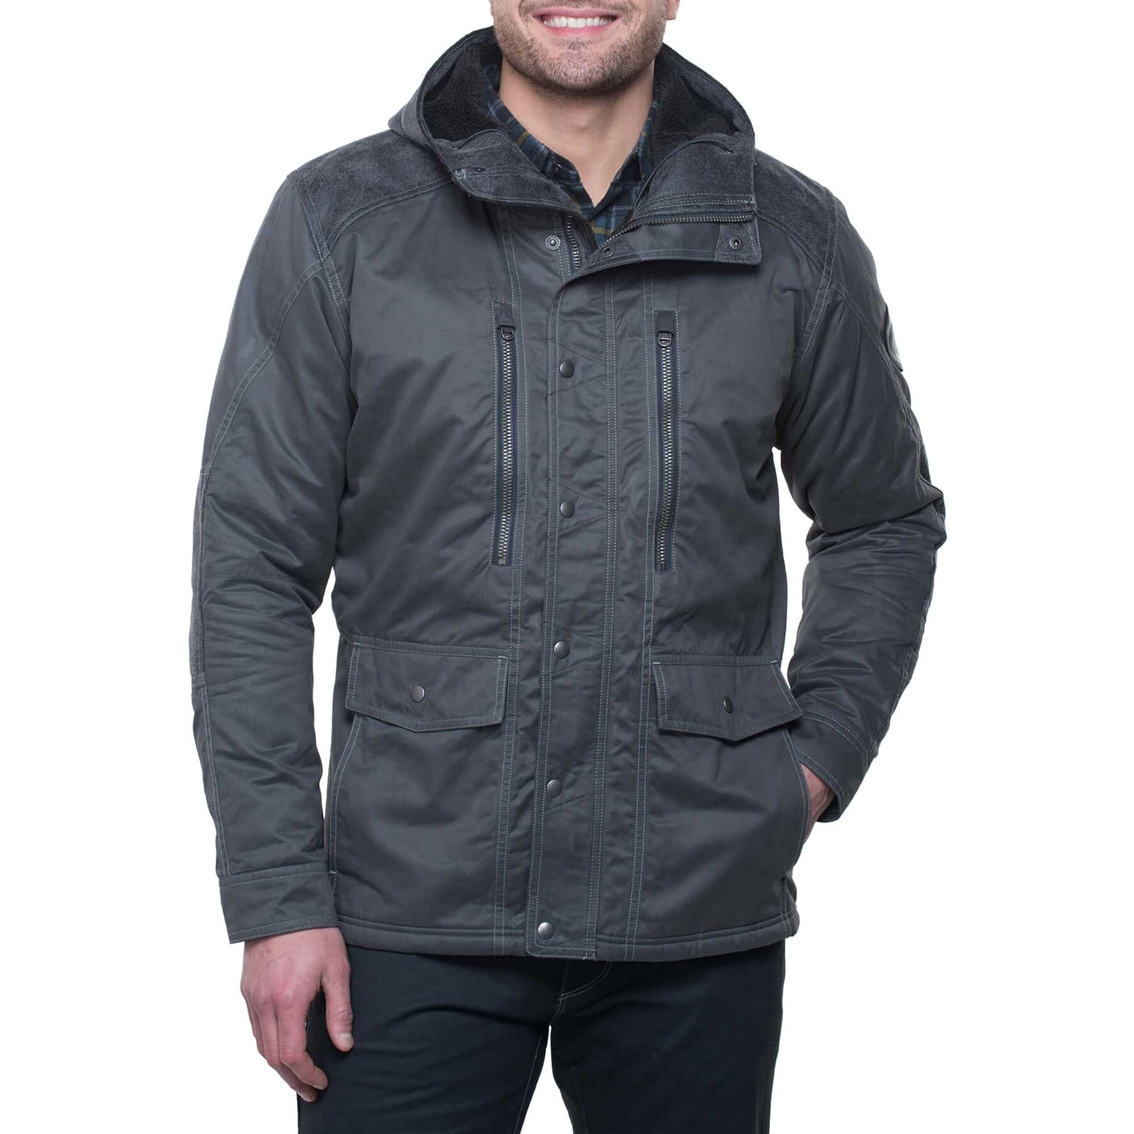 Kuhl Arktik Jacket | Jackets | Clothing & Accessories | Shop The Exchange